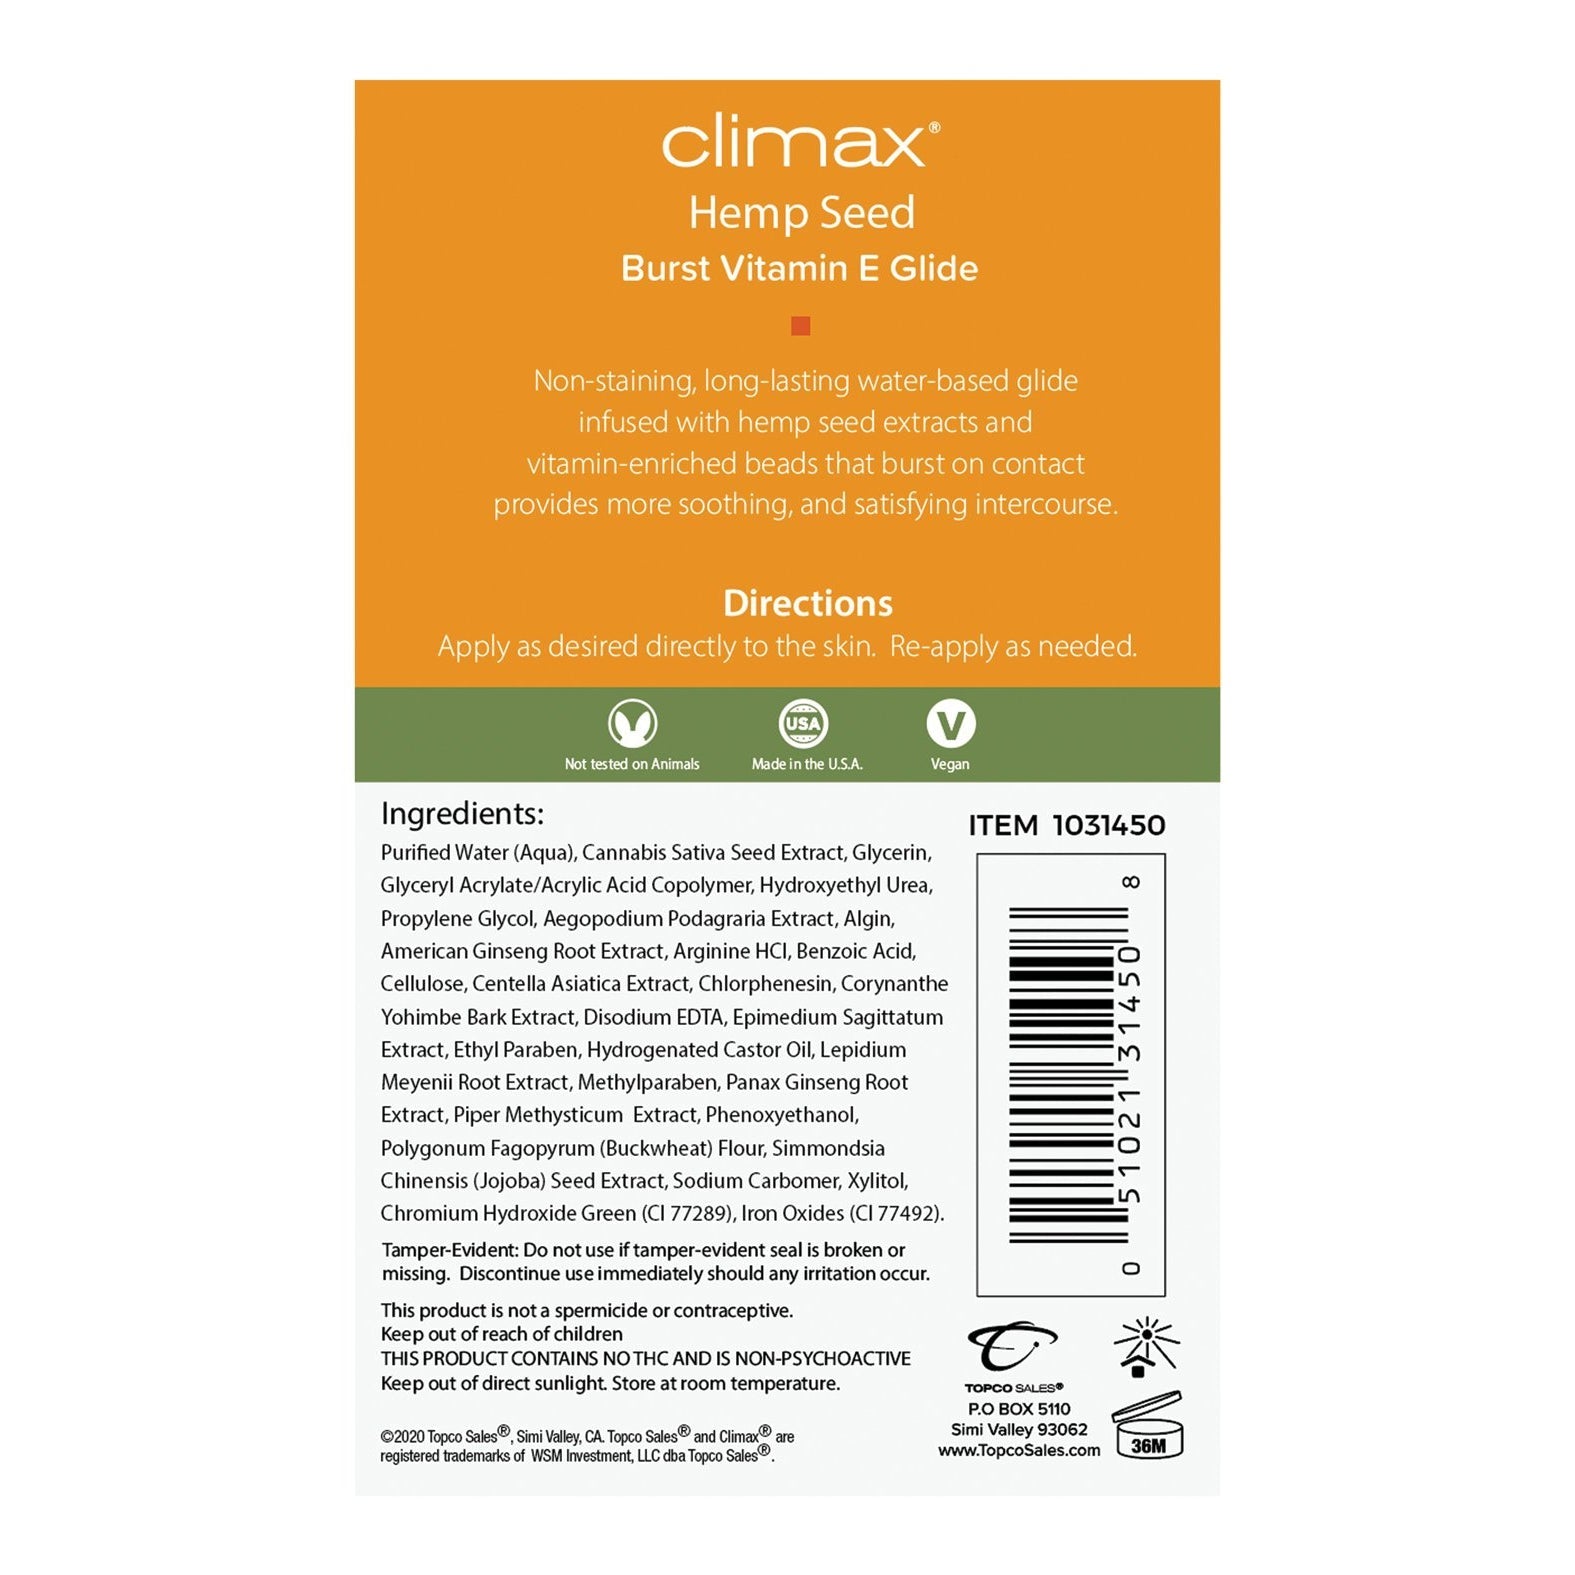 Climax Hemp Seed Burst Vitamin E Glide